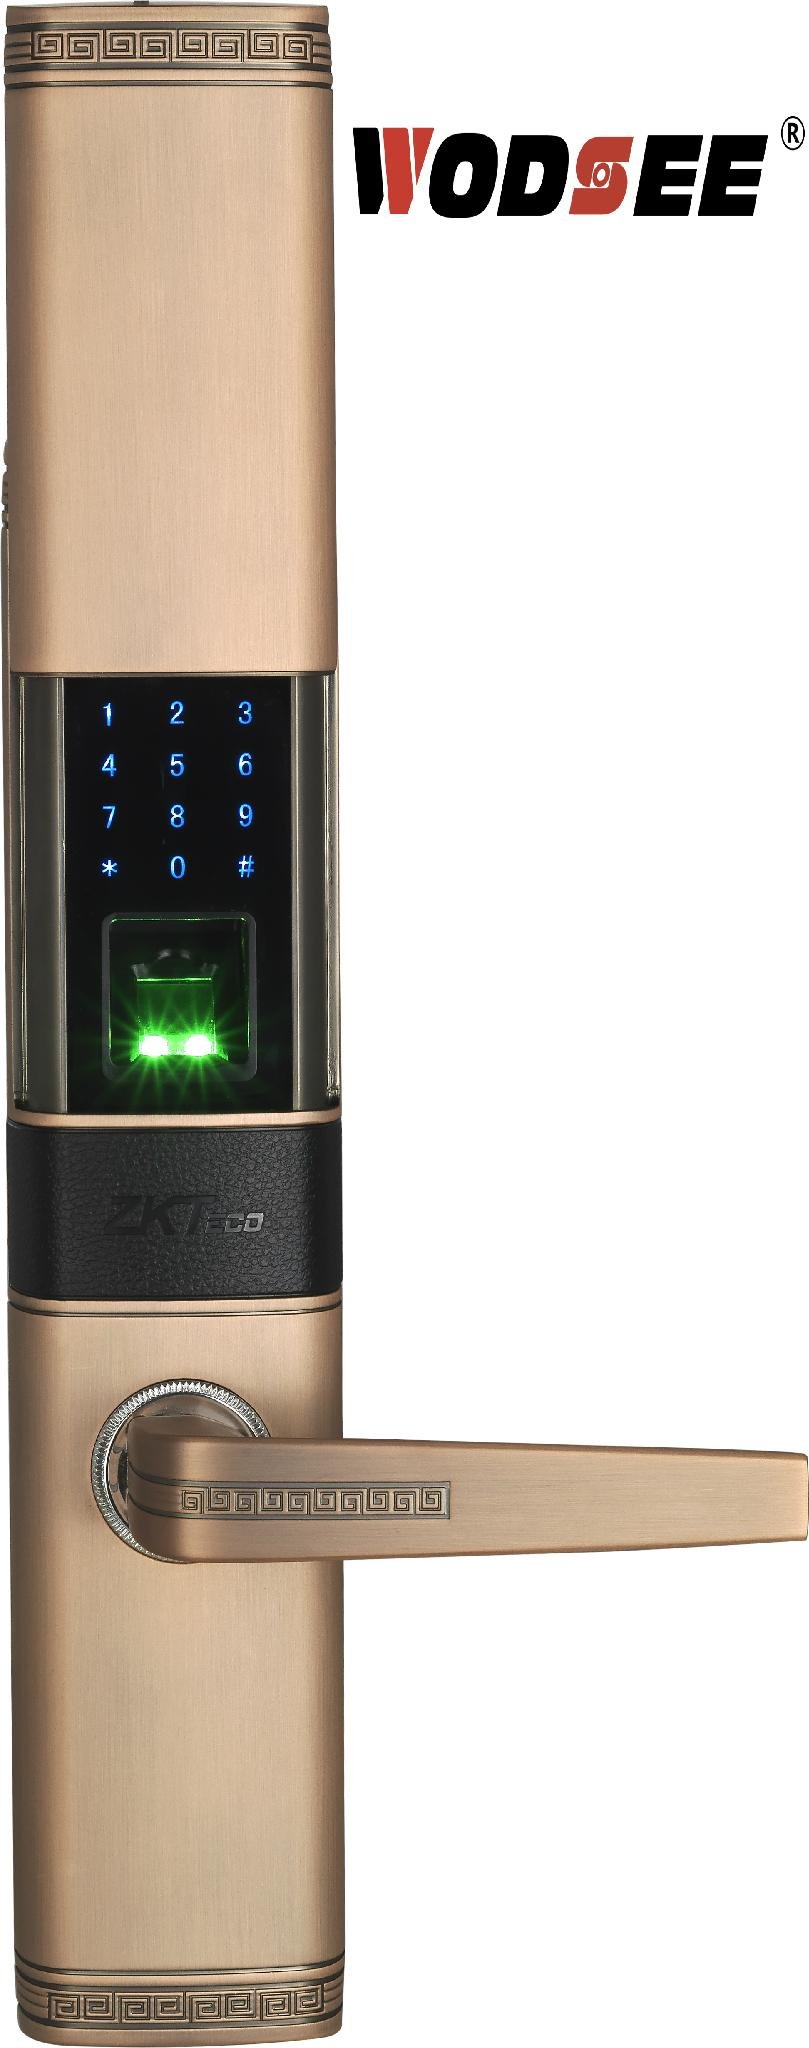 WODSEE New product fingerprint biometric door lock with password digital handle 